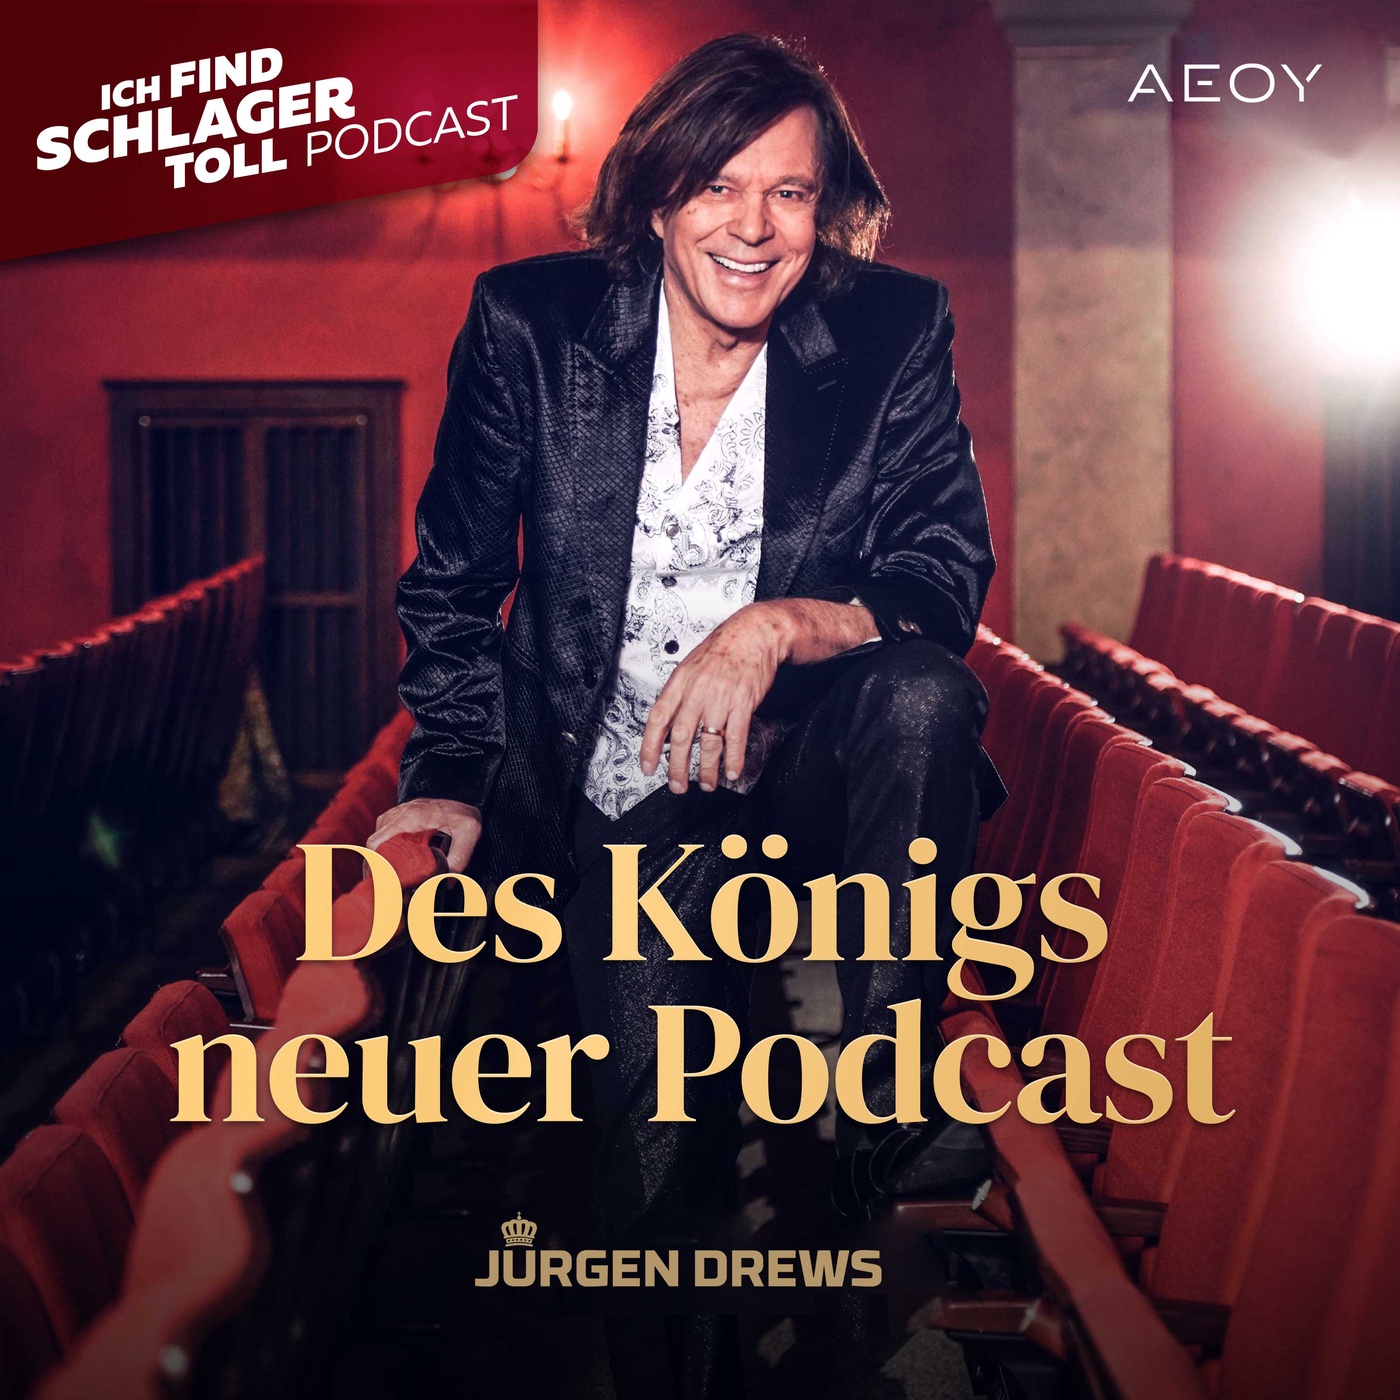 JÜRGEN DREWS: Des Königs neuer Podcast